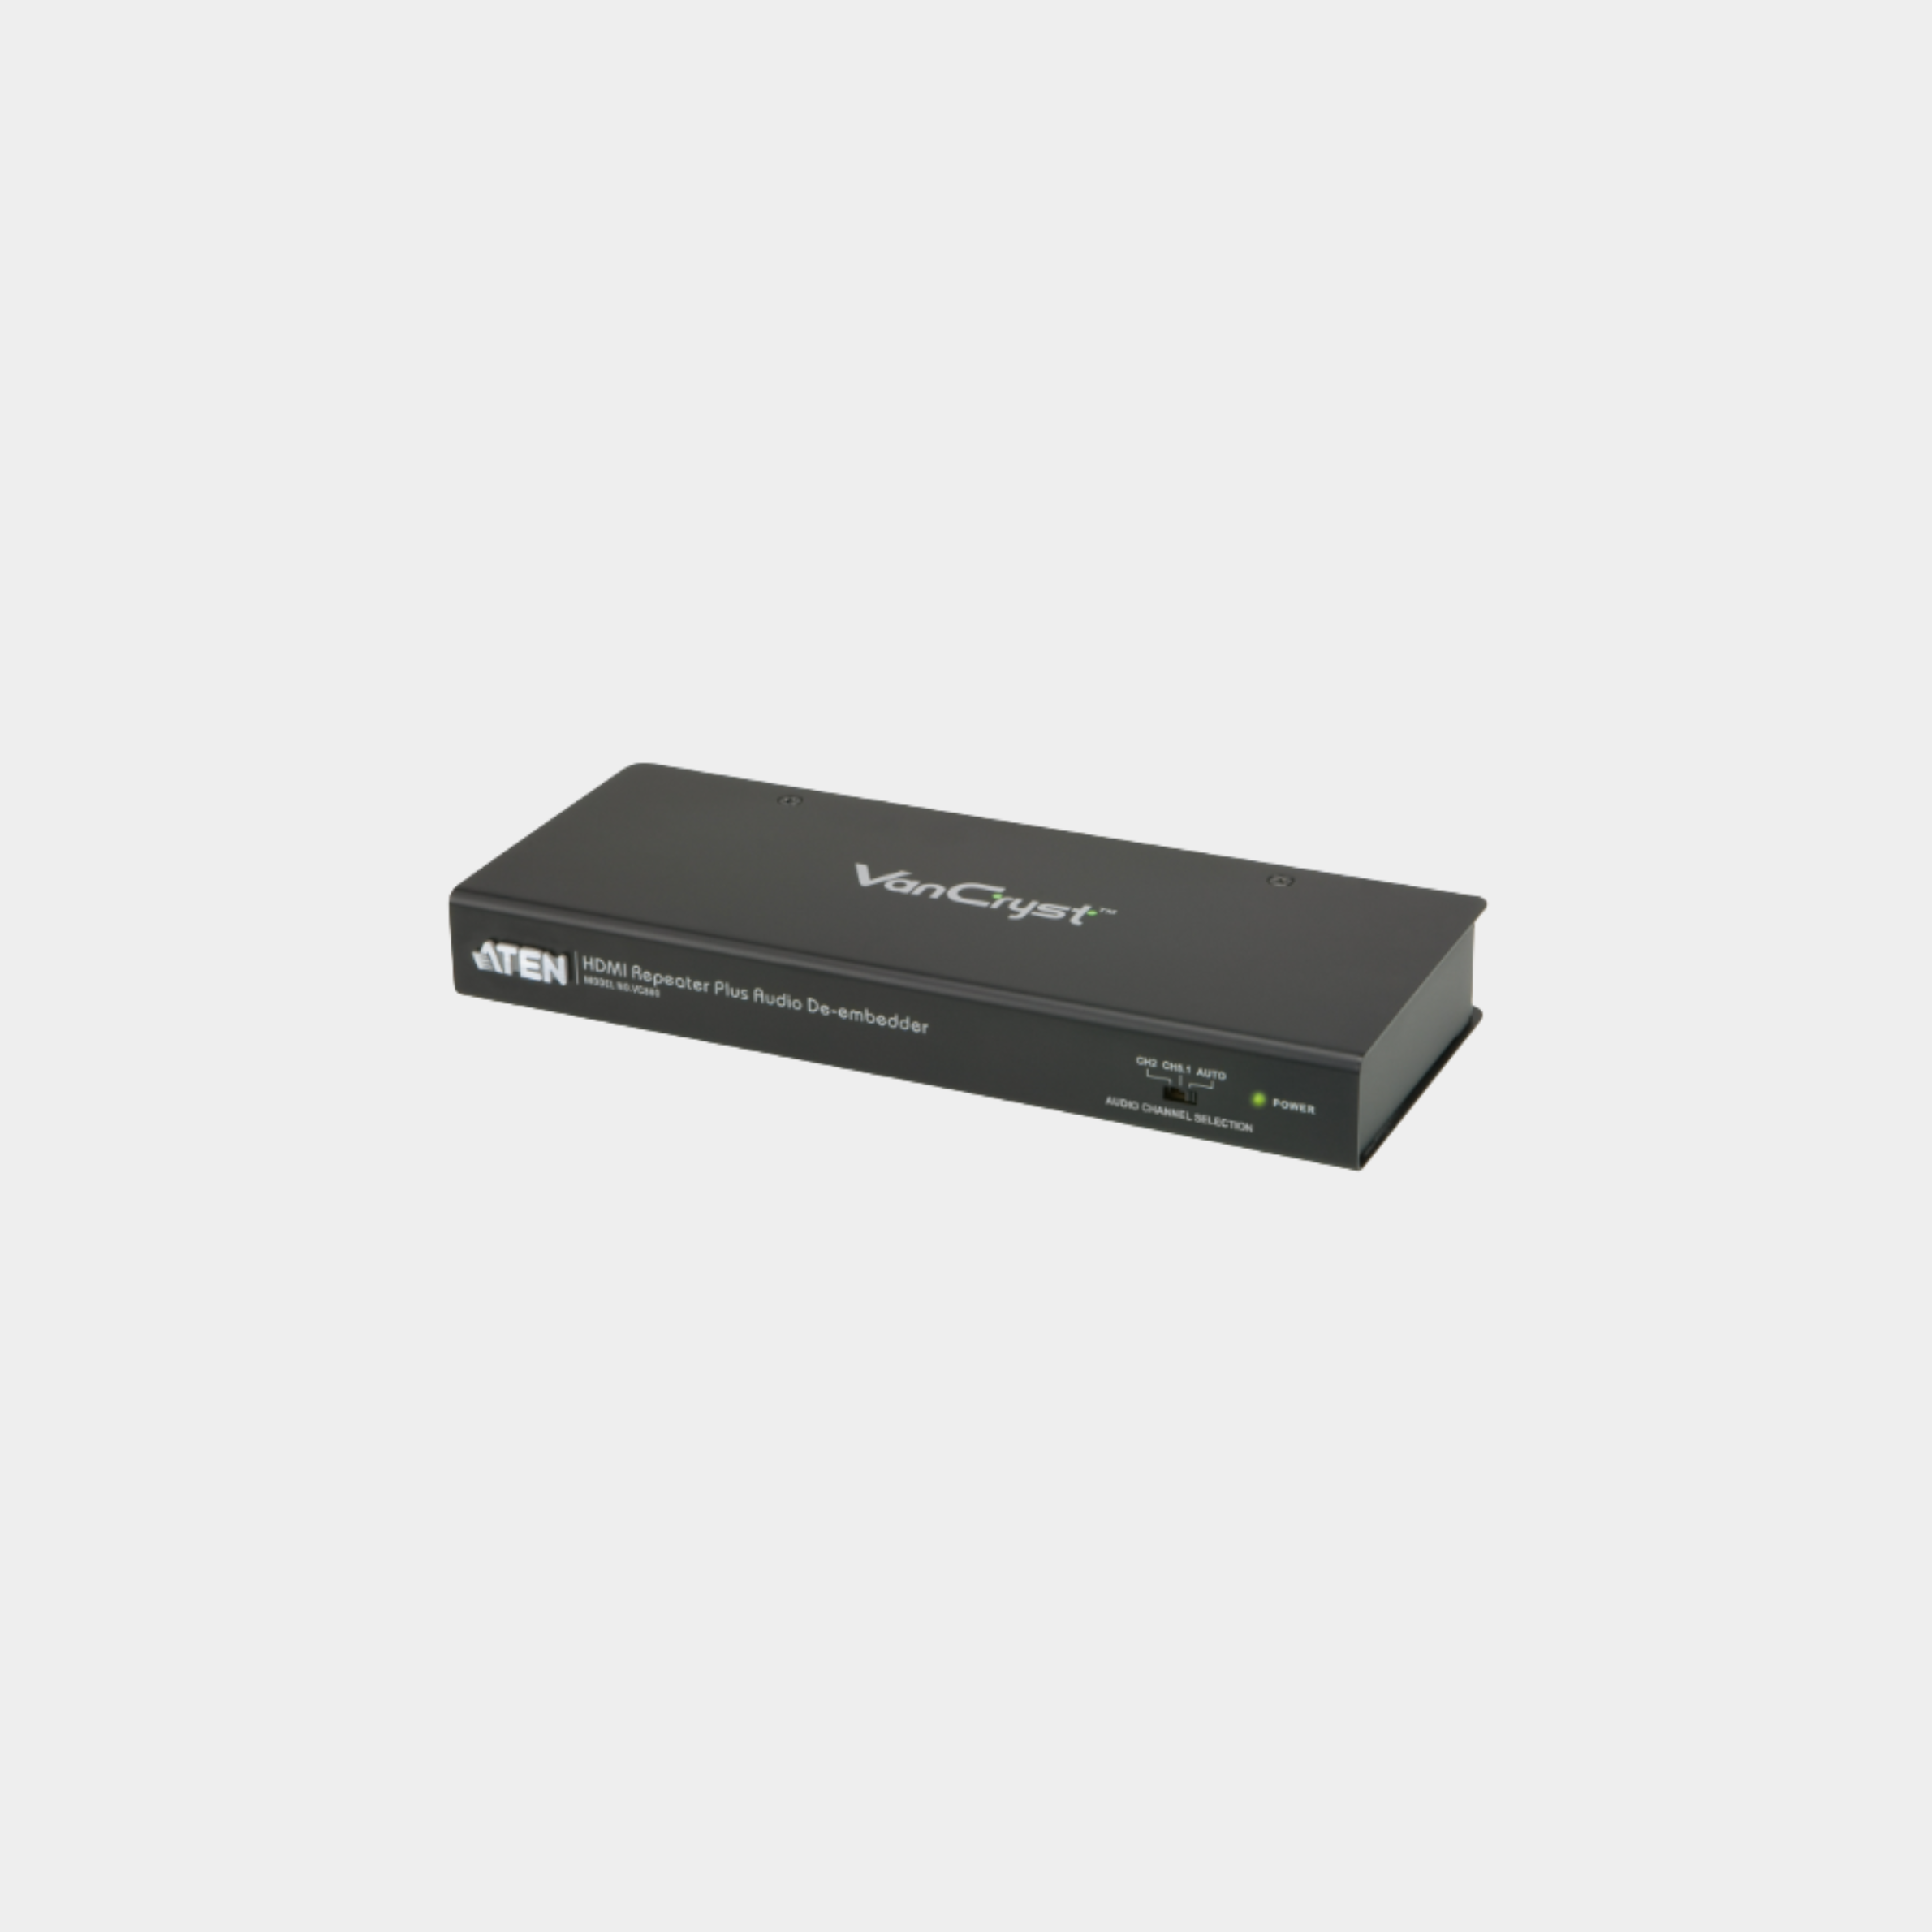 Aten HDMI Repeater Plus Audio De-embedder(ATEN VC880)